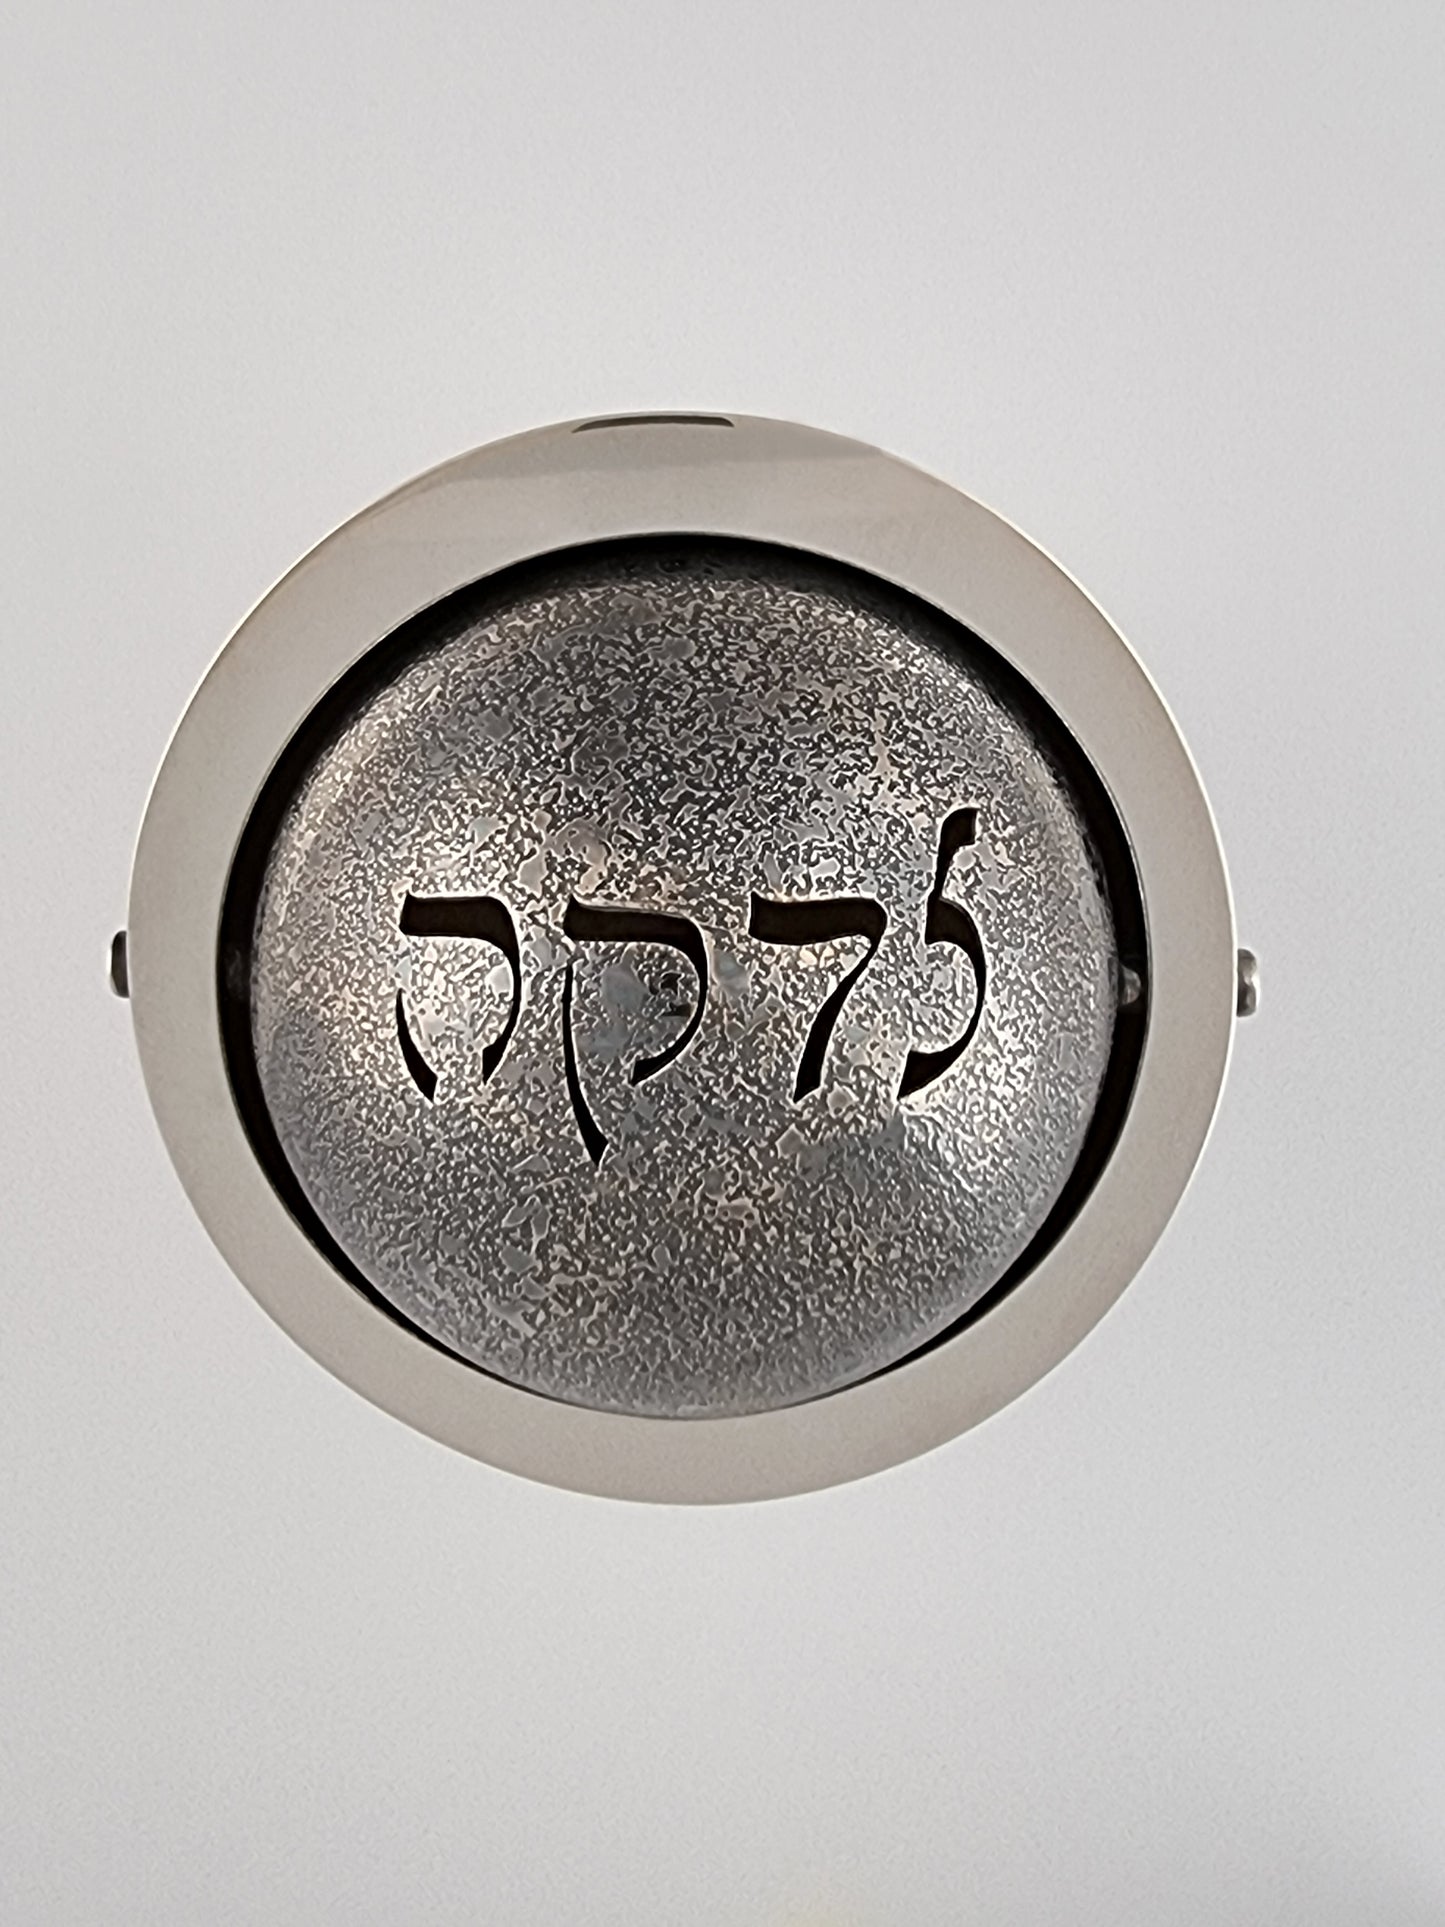 The word "Tzedakah" in Rashi script is pierced through the etched silver ball. 